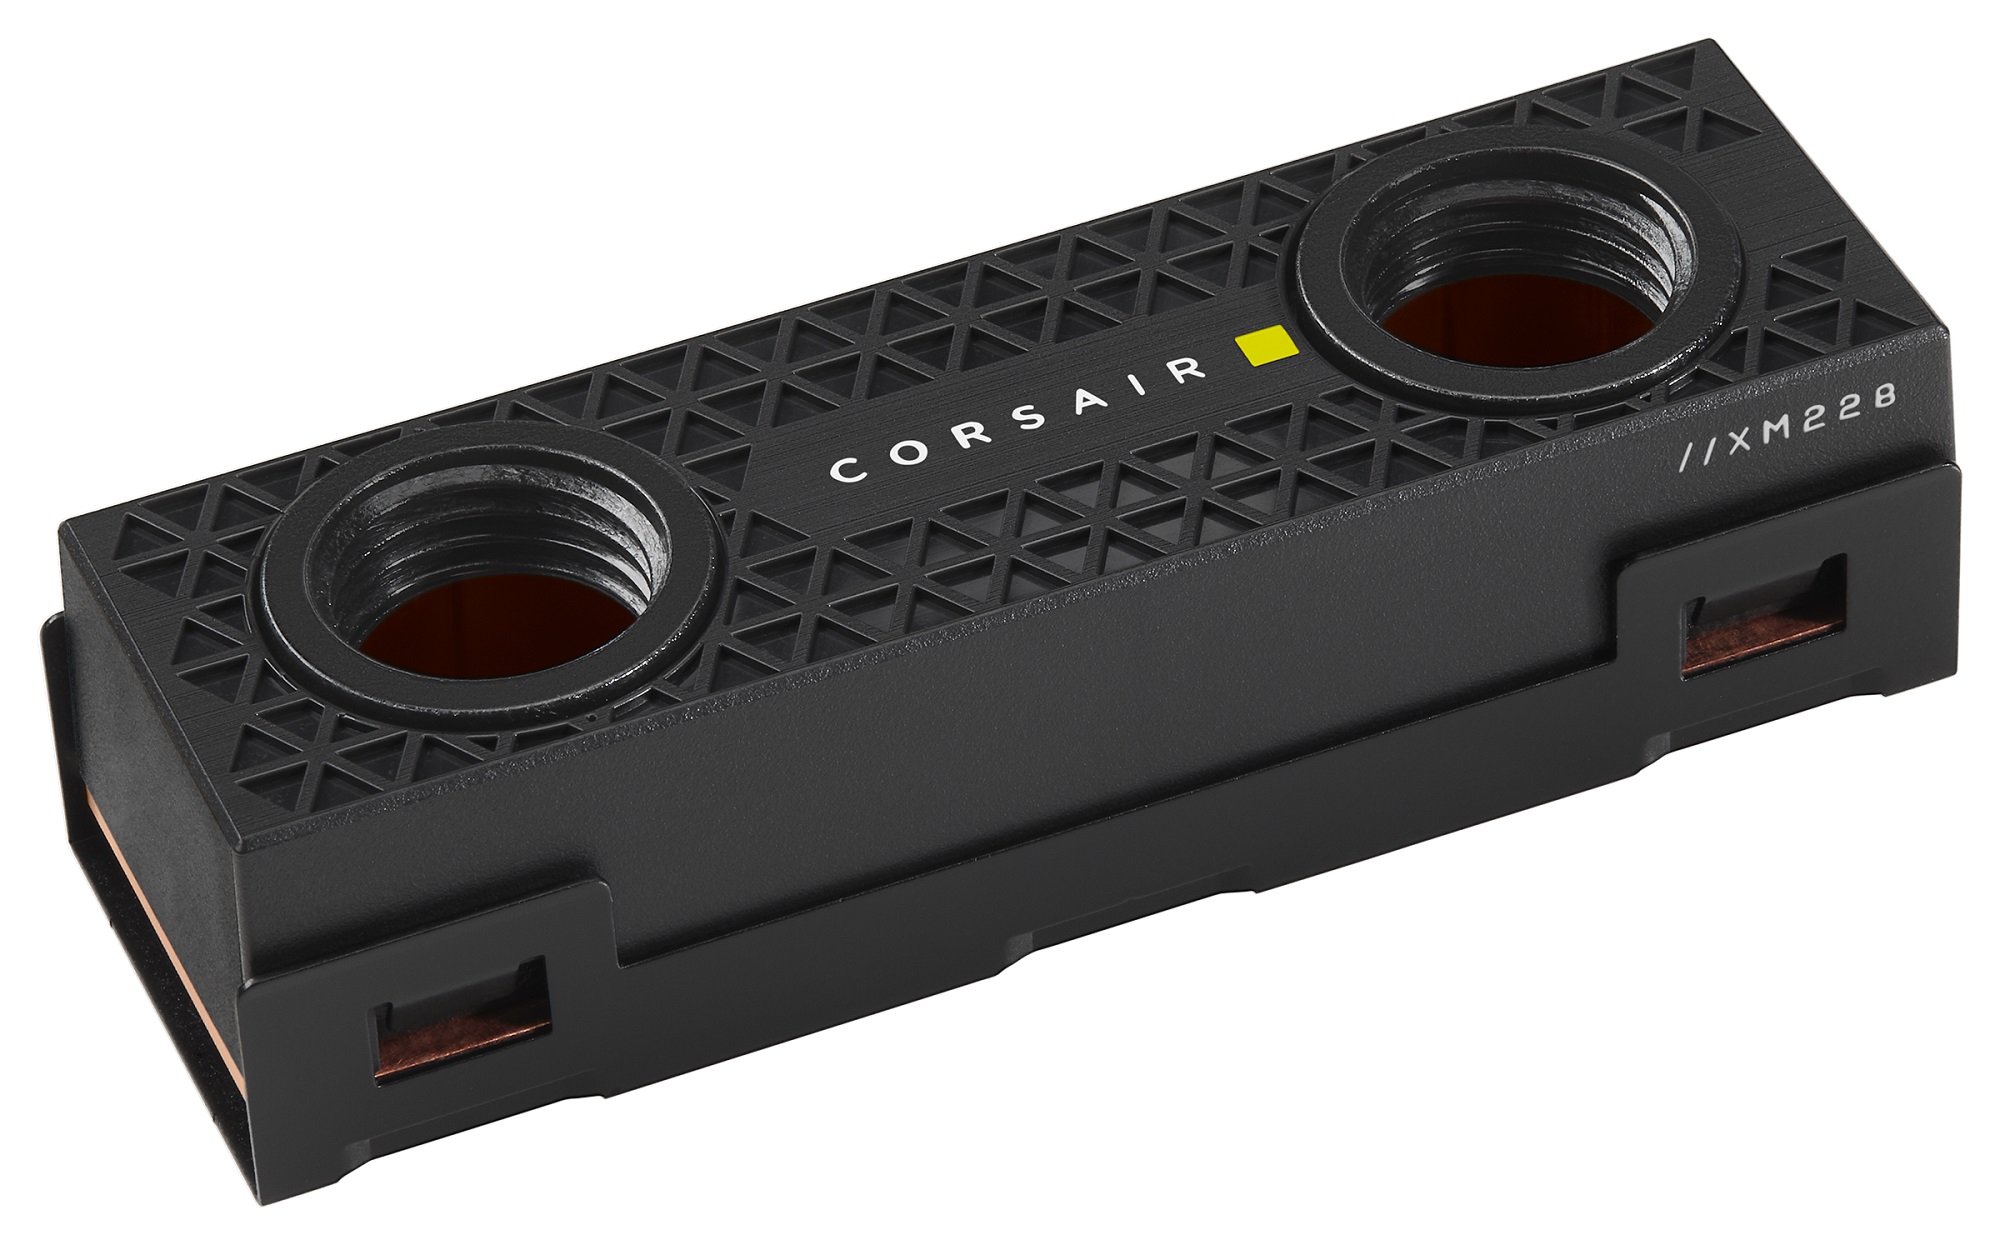 Corsair MP600 Pro XT - Best high-performance PCIe 4.0 SSD